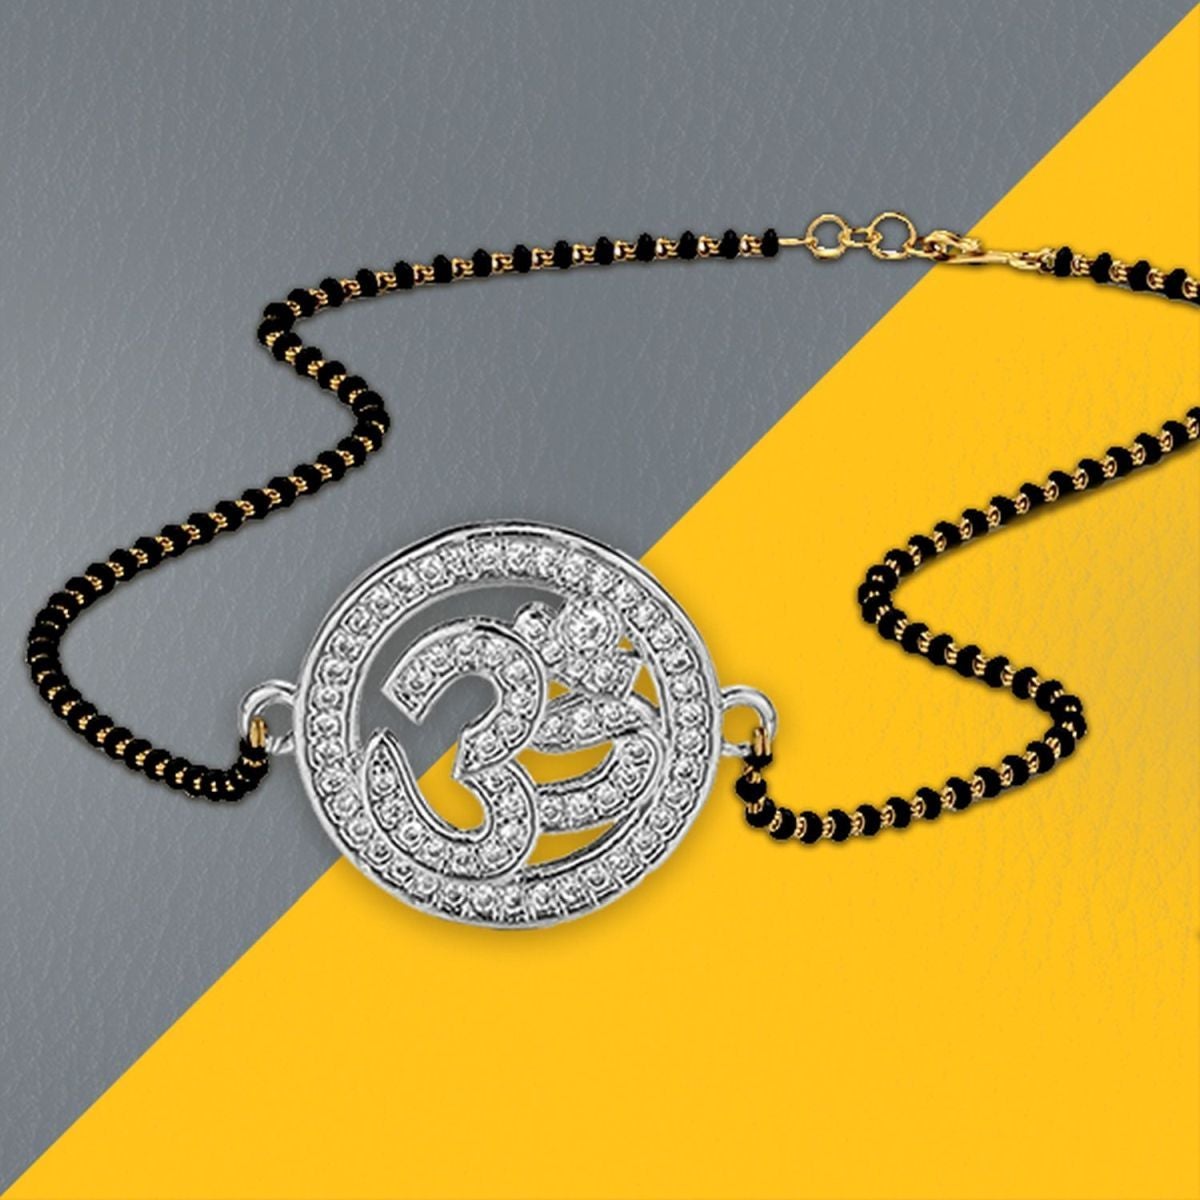 Aum Om Silver Cz Adjustable Mangalsutra Chain Necklace